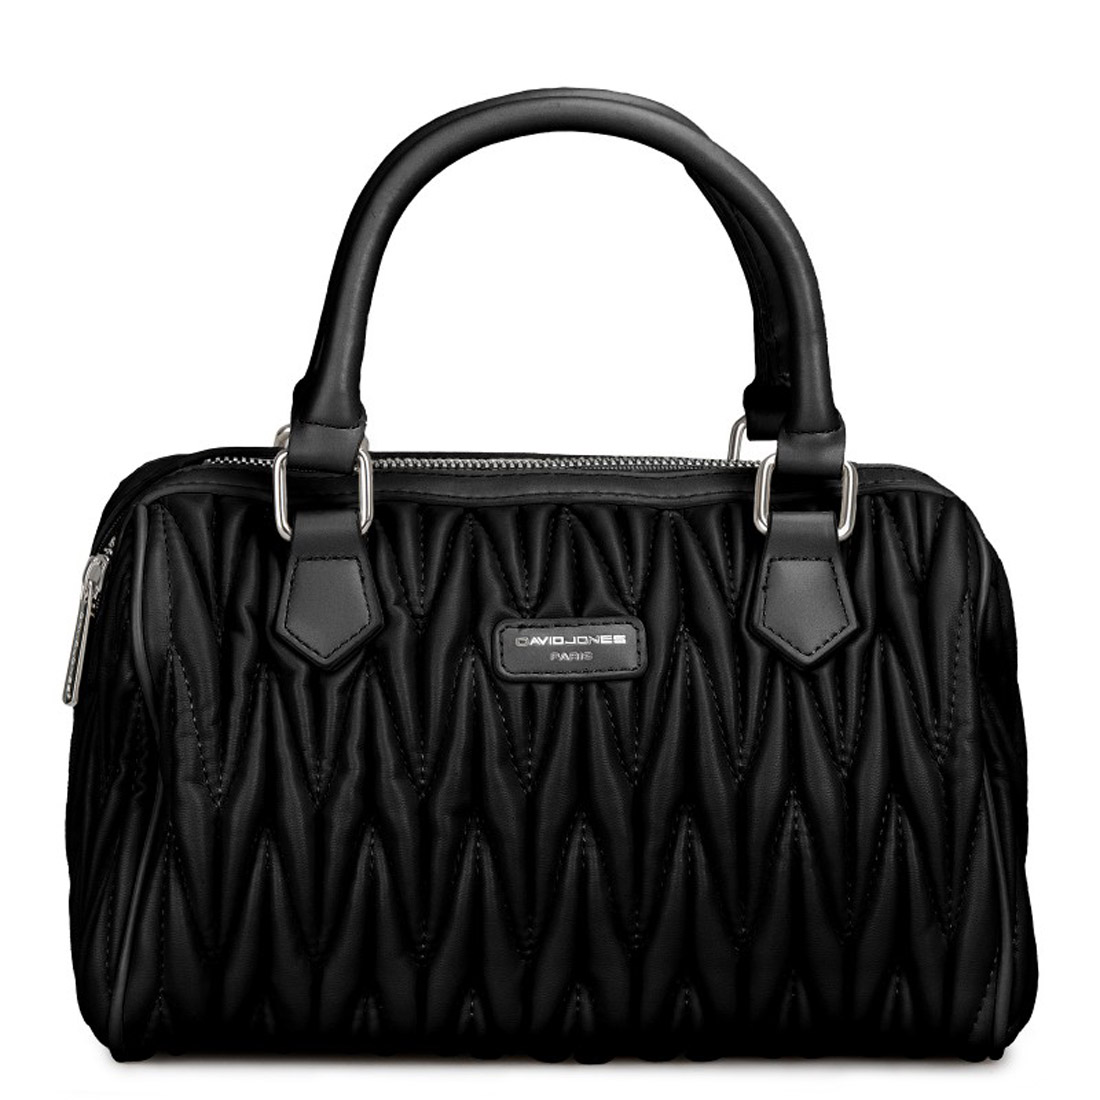 David Jones Tote Bag > Boutique Handbags > Mezon Handbags